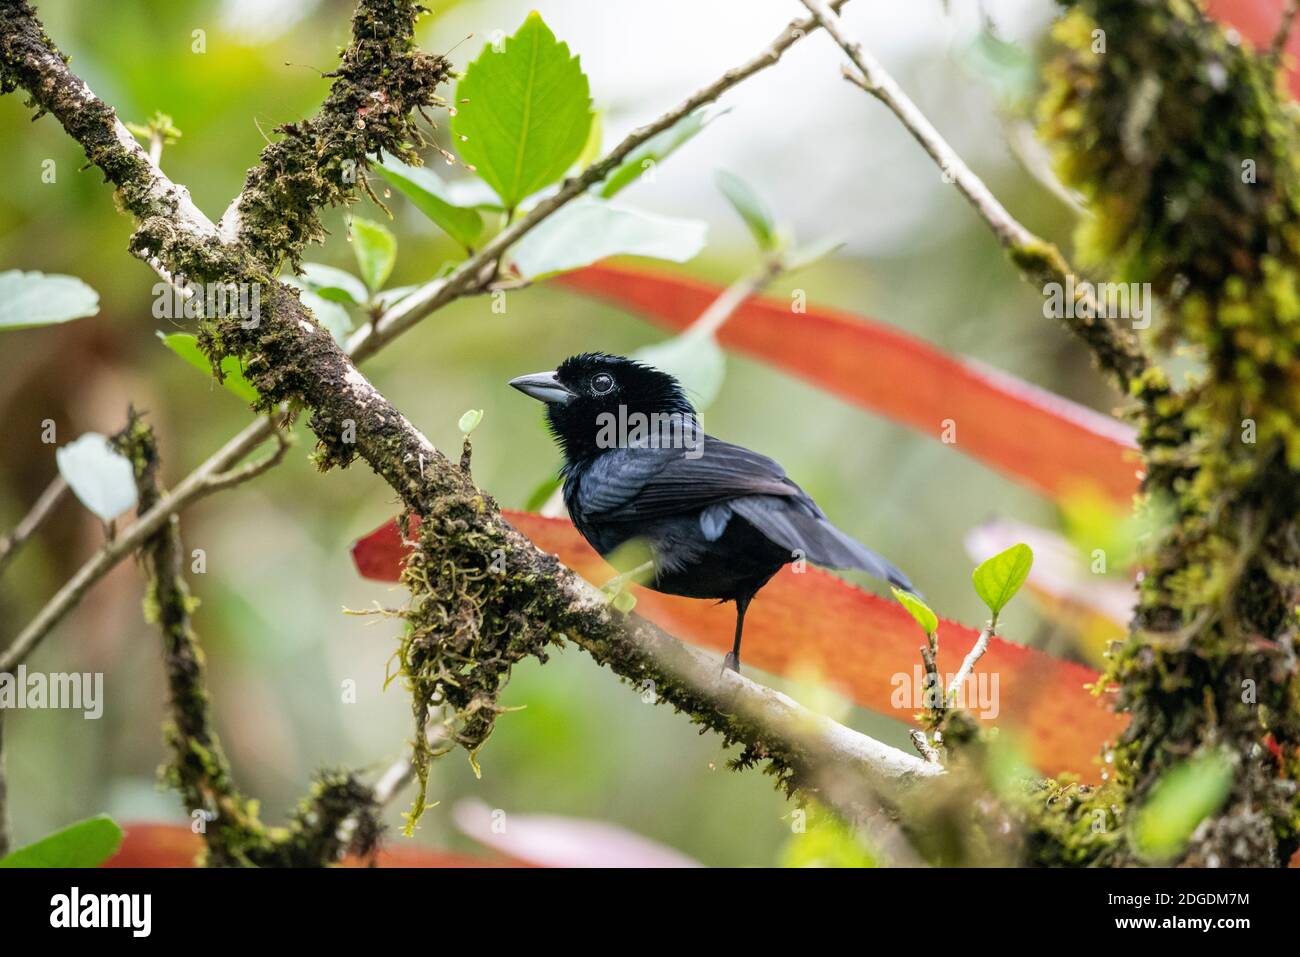 Beautiful black tropical bird on tree branch in green rainforest landscape, Mantiqueira Mountains, Rio de Janeiro, Brazil Stock Photo